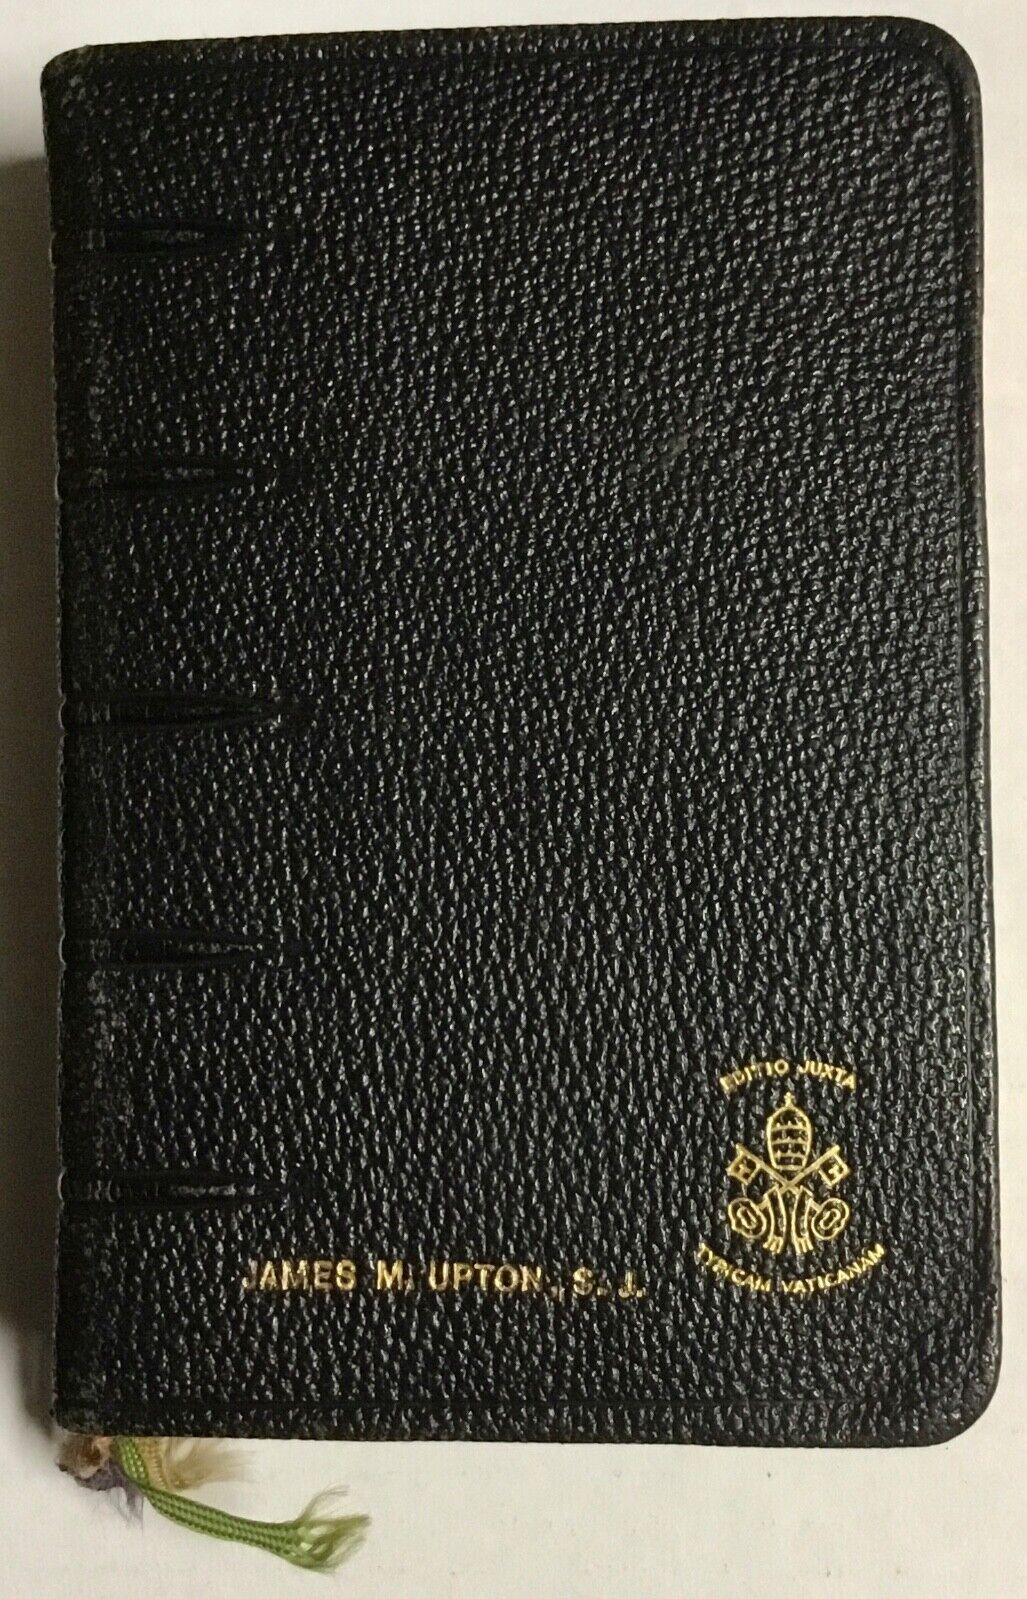 Missale Romanum/Roman Missal 1949 Religion Leather Cover + Case Good Condition